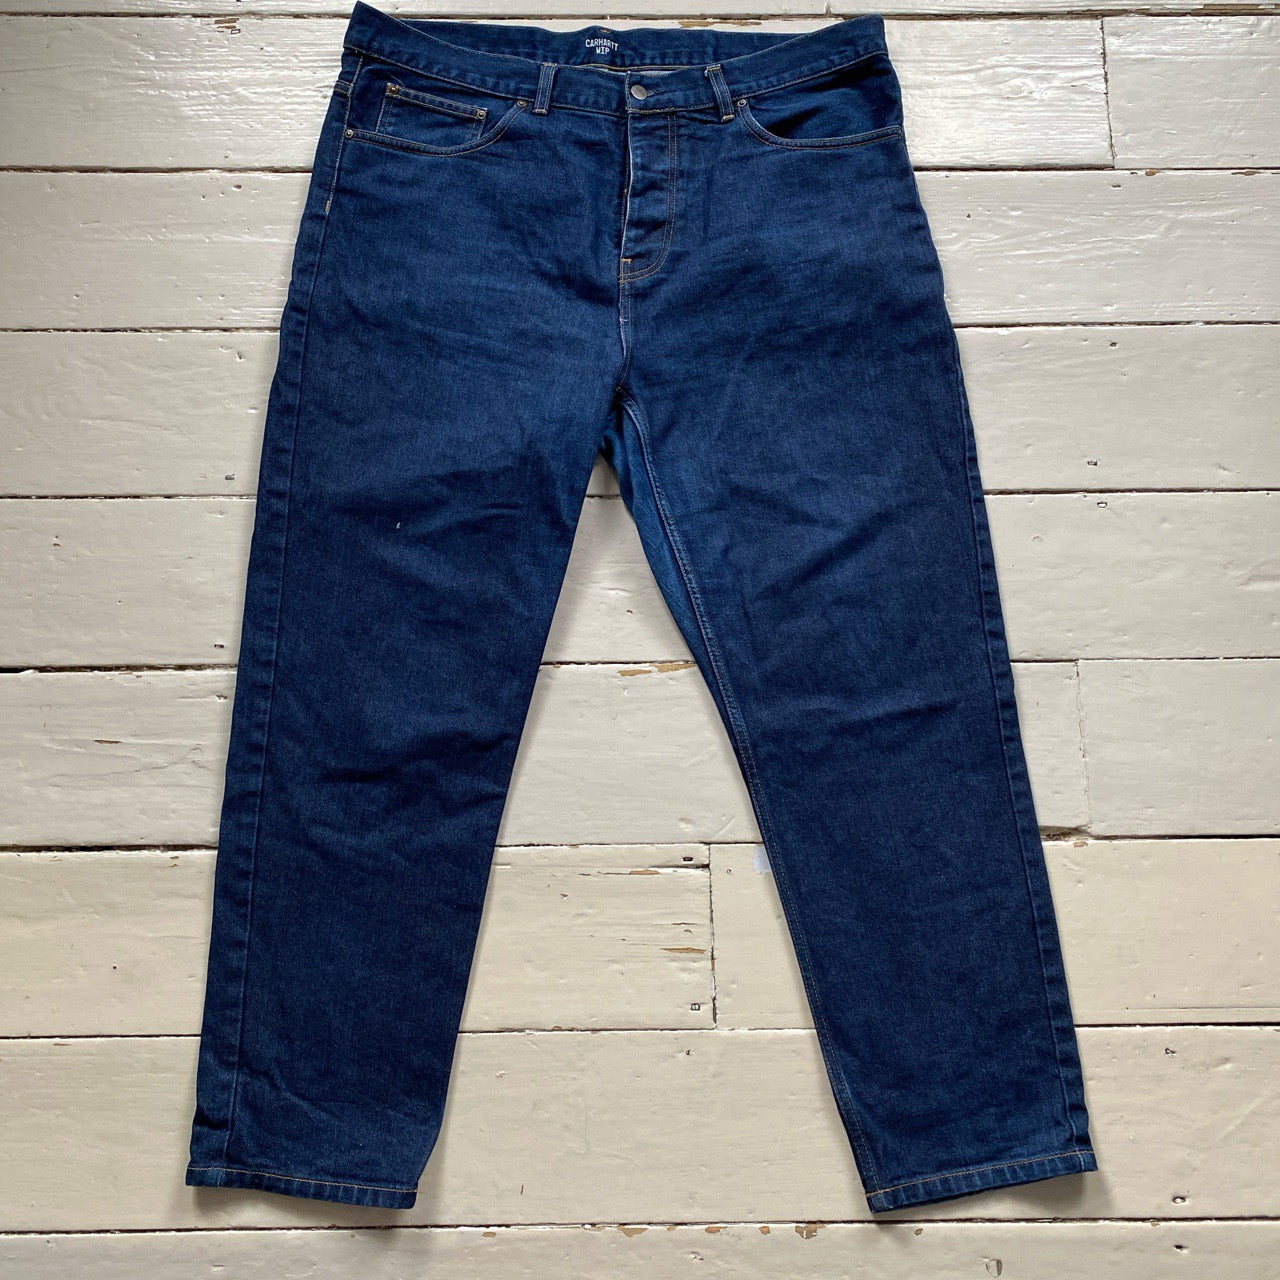 Carhartt Newel Pant Jeans (38/28)